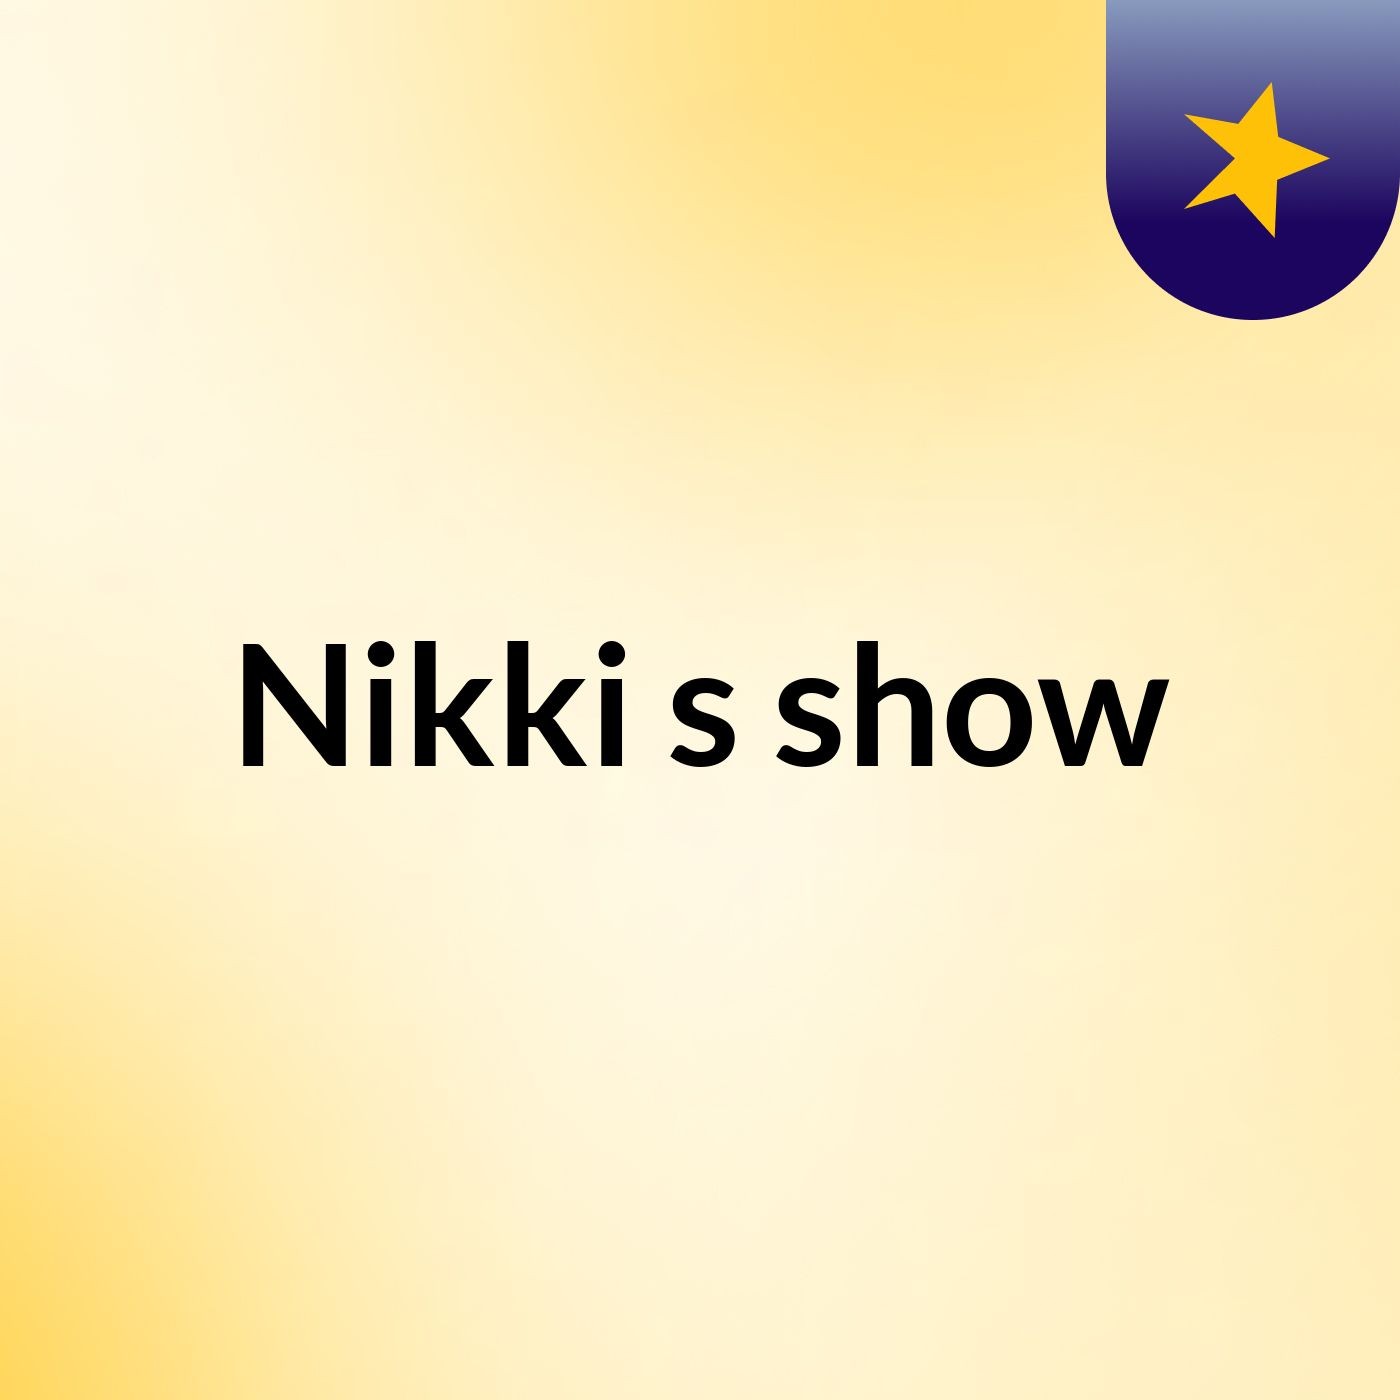 Nikki's show